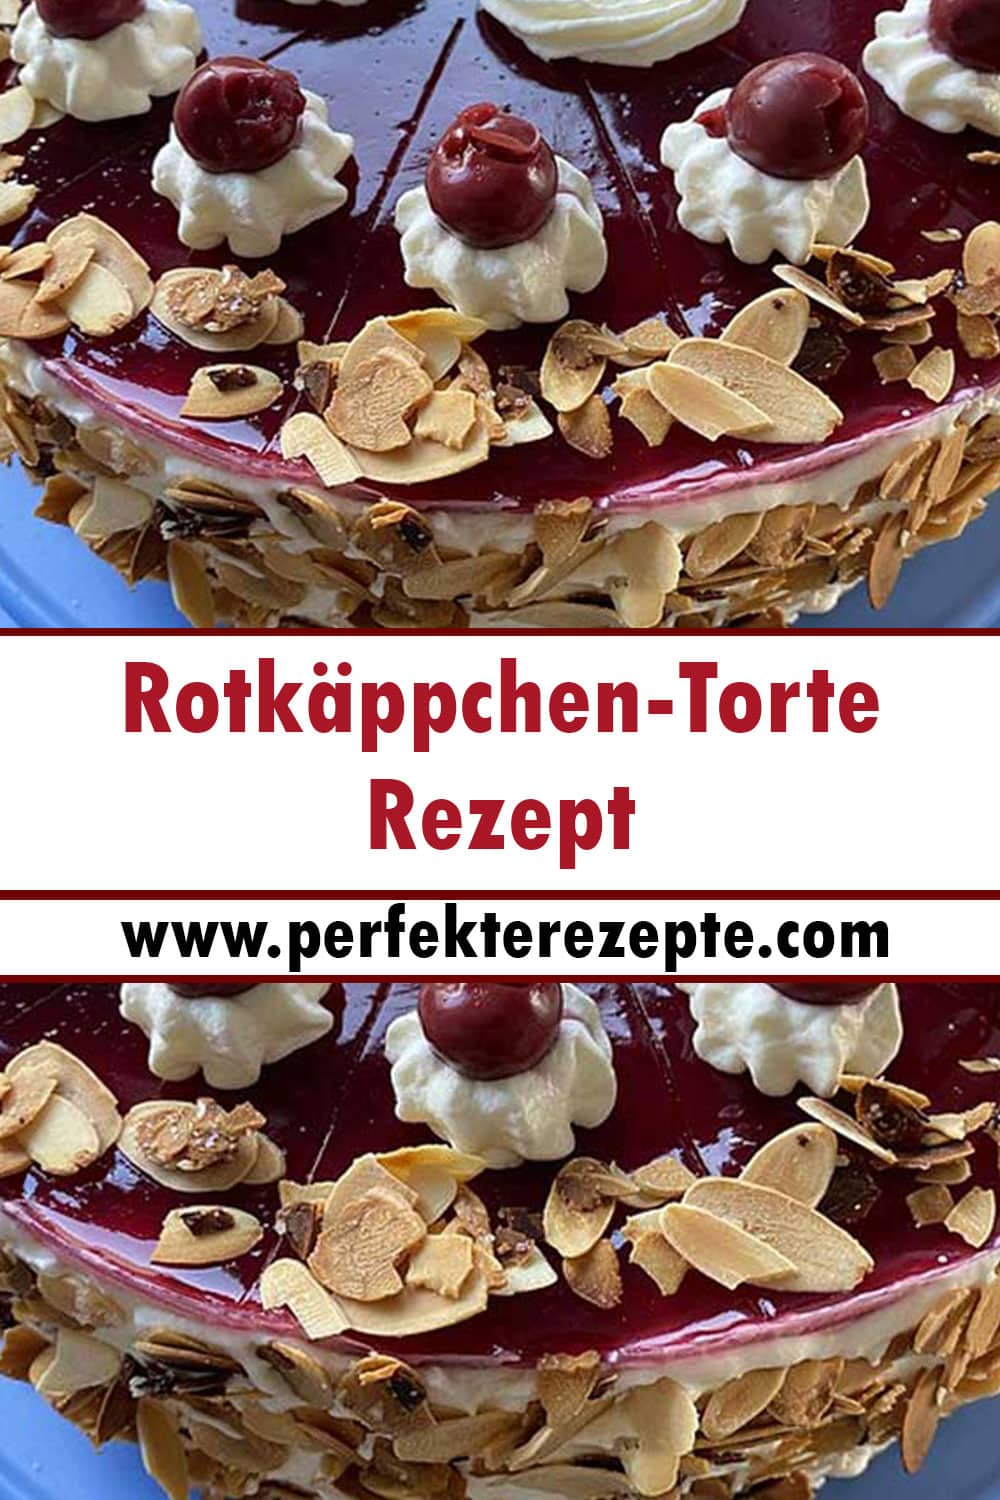 Rotkäppchen-Torte Rezept